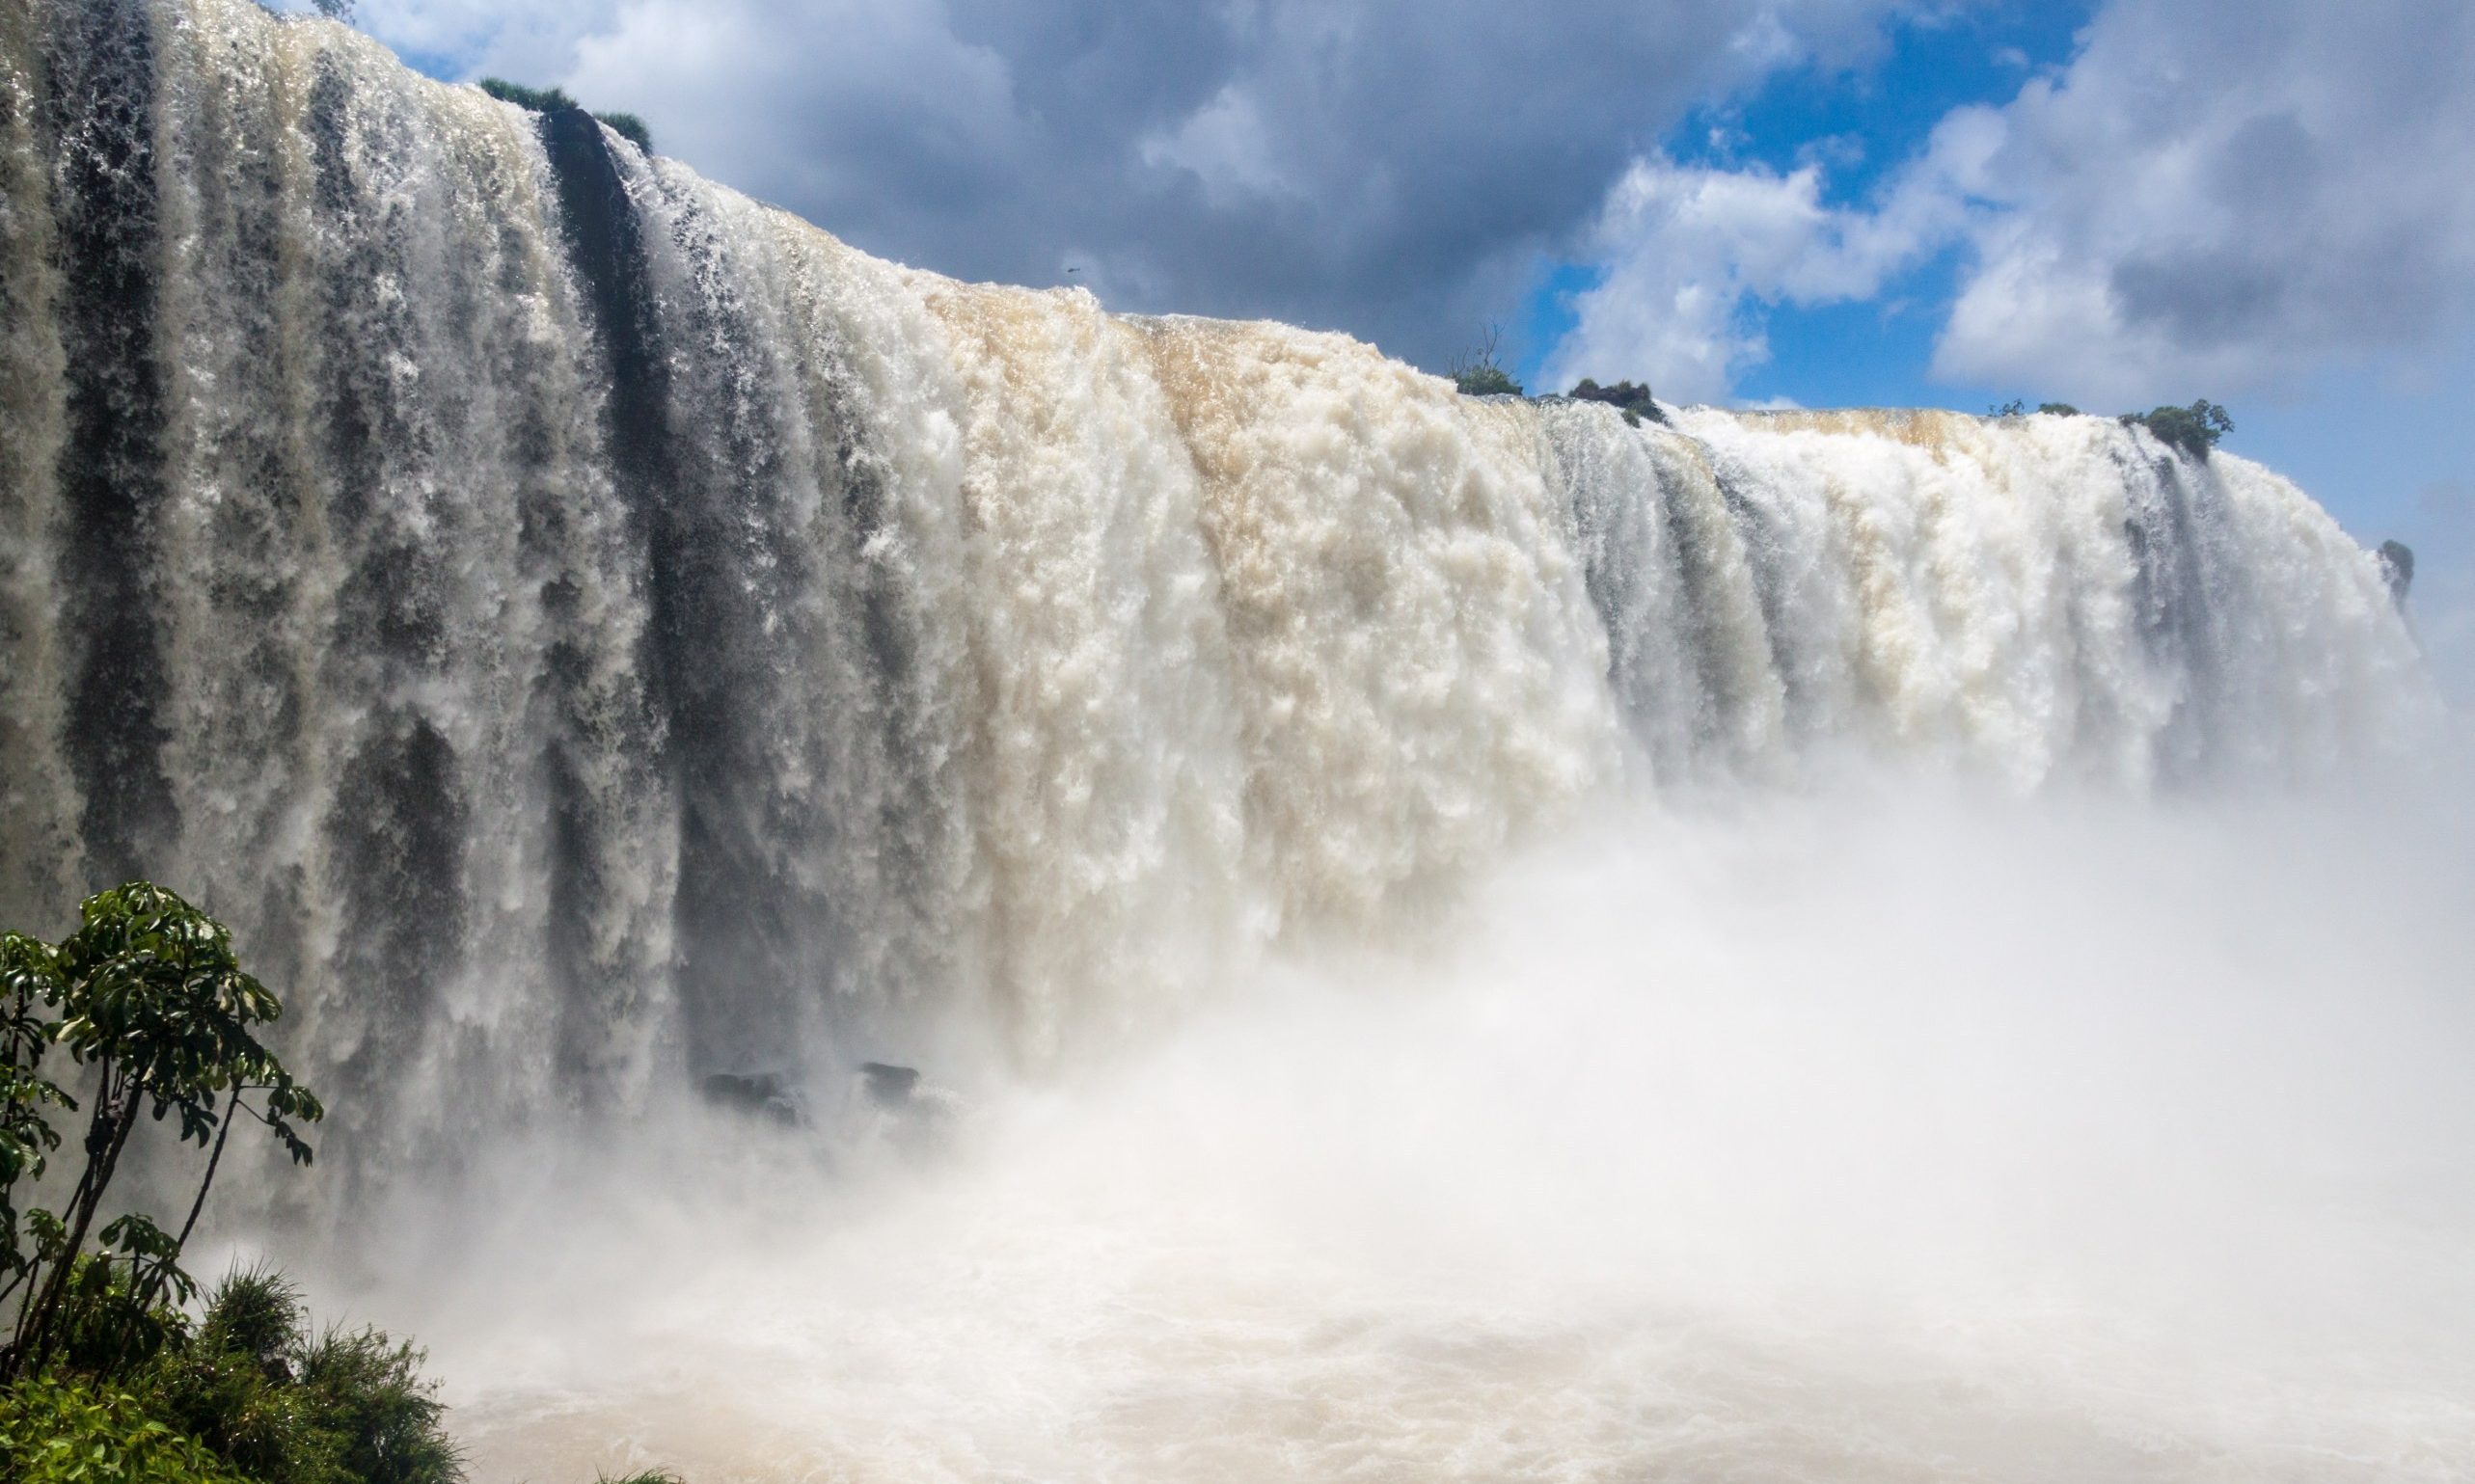 Incredible amounts of water gush over the Iguaçu falls. 